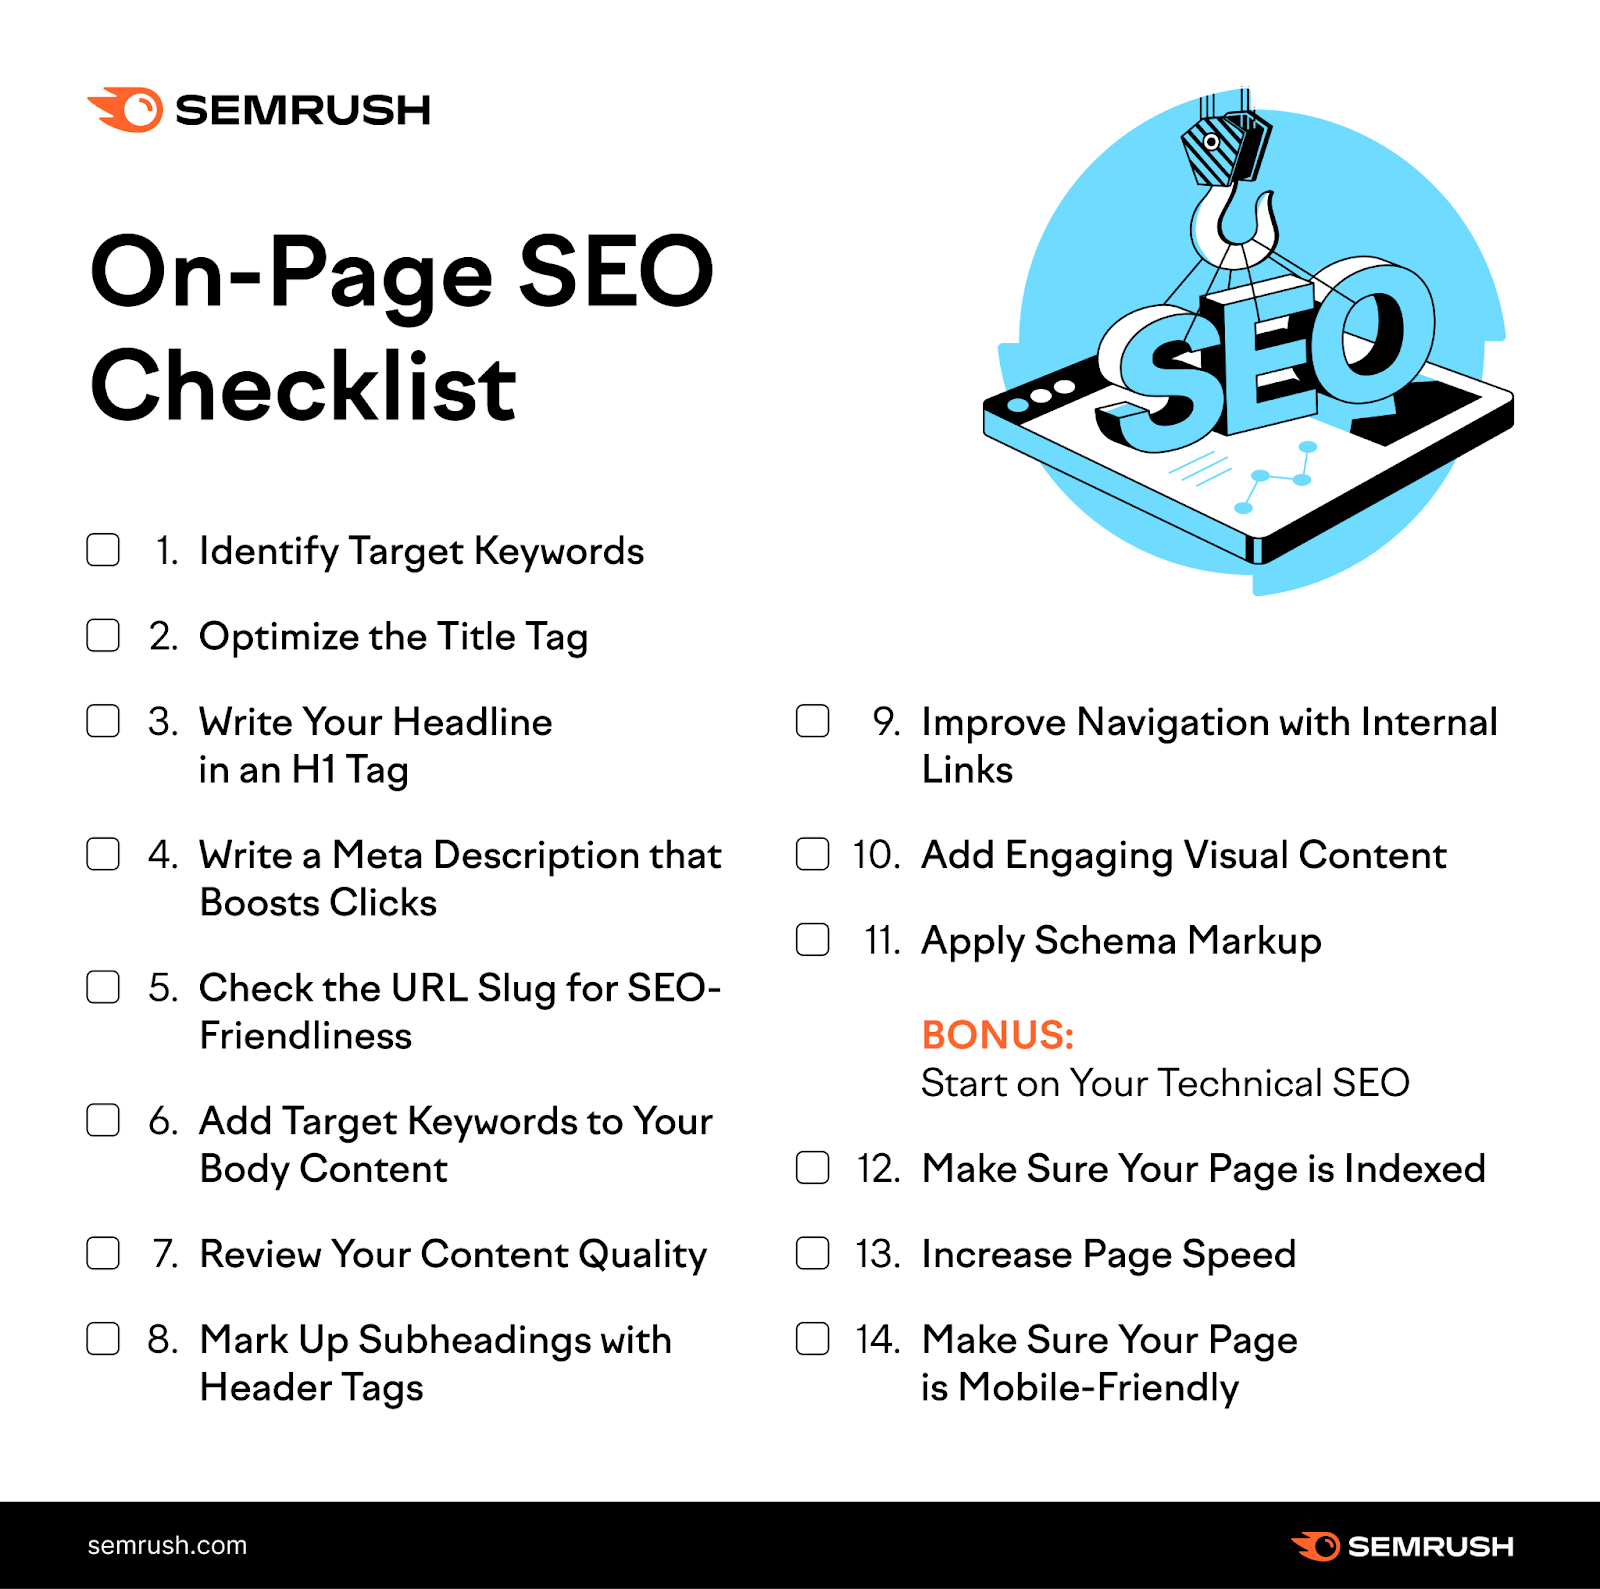 Semrush’s On-Page SEO Checklist